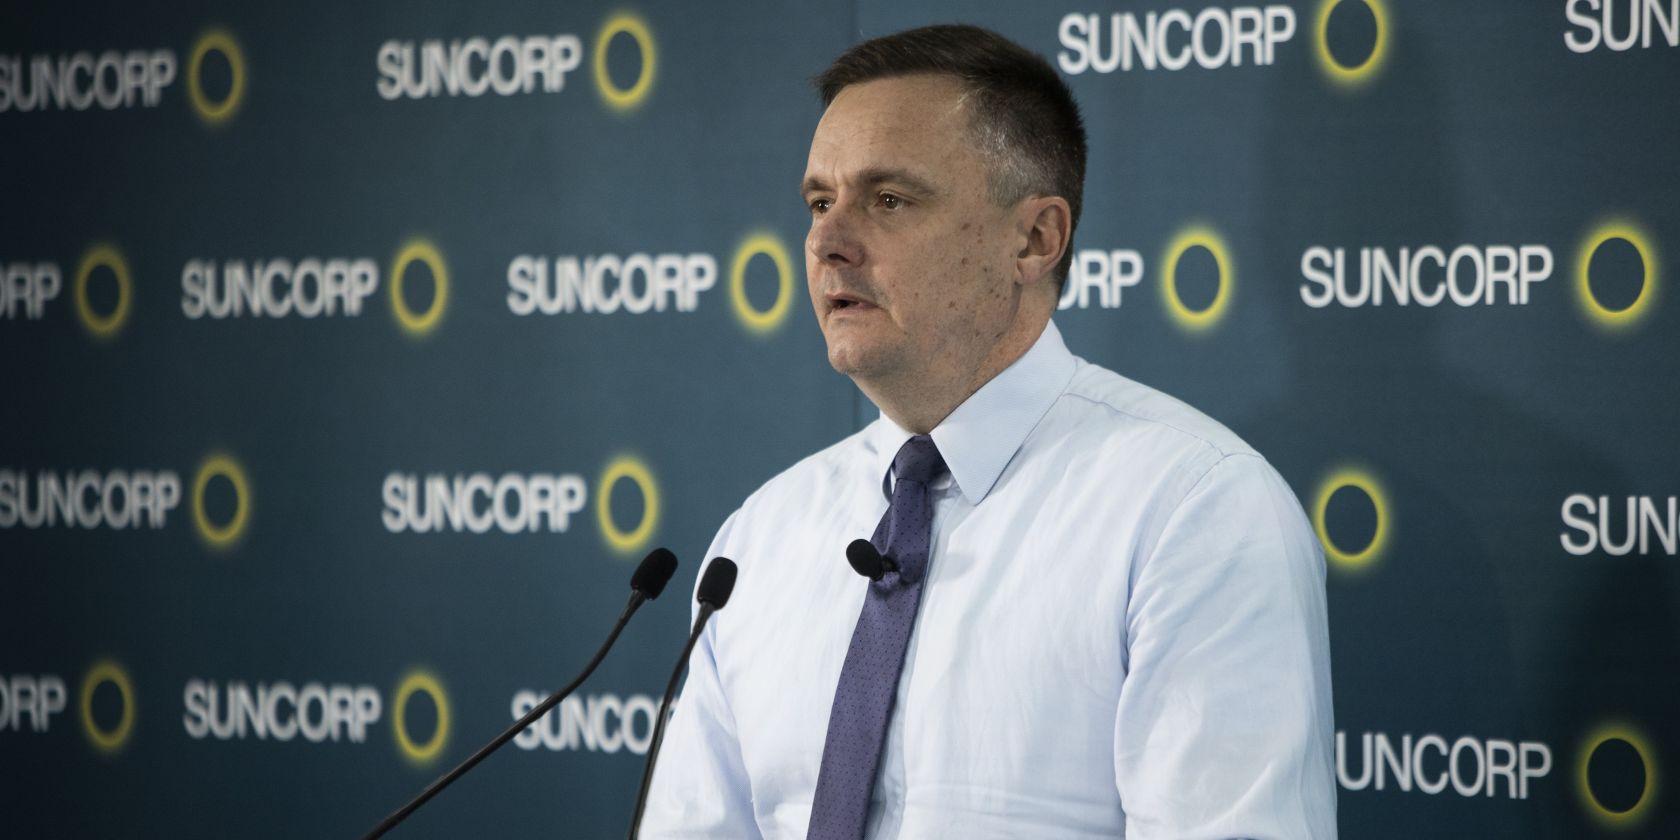 Suncorp half year 2022 result announcement